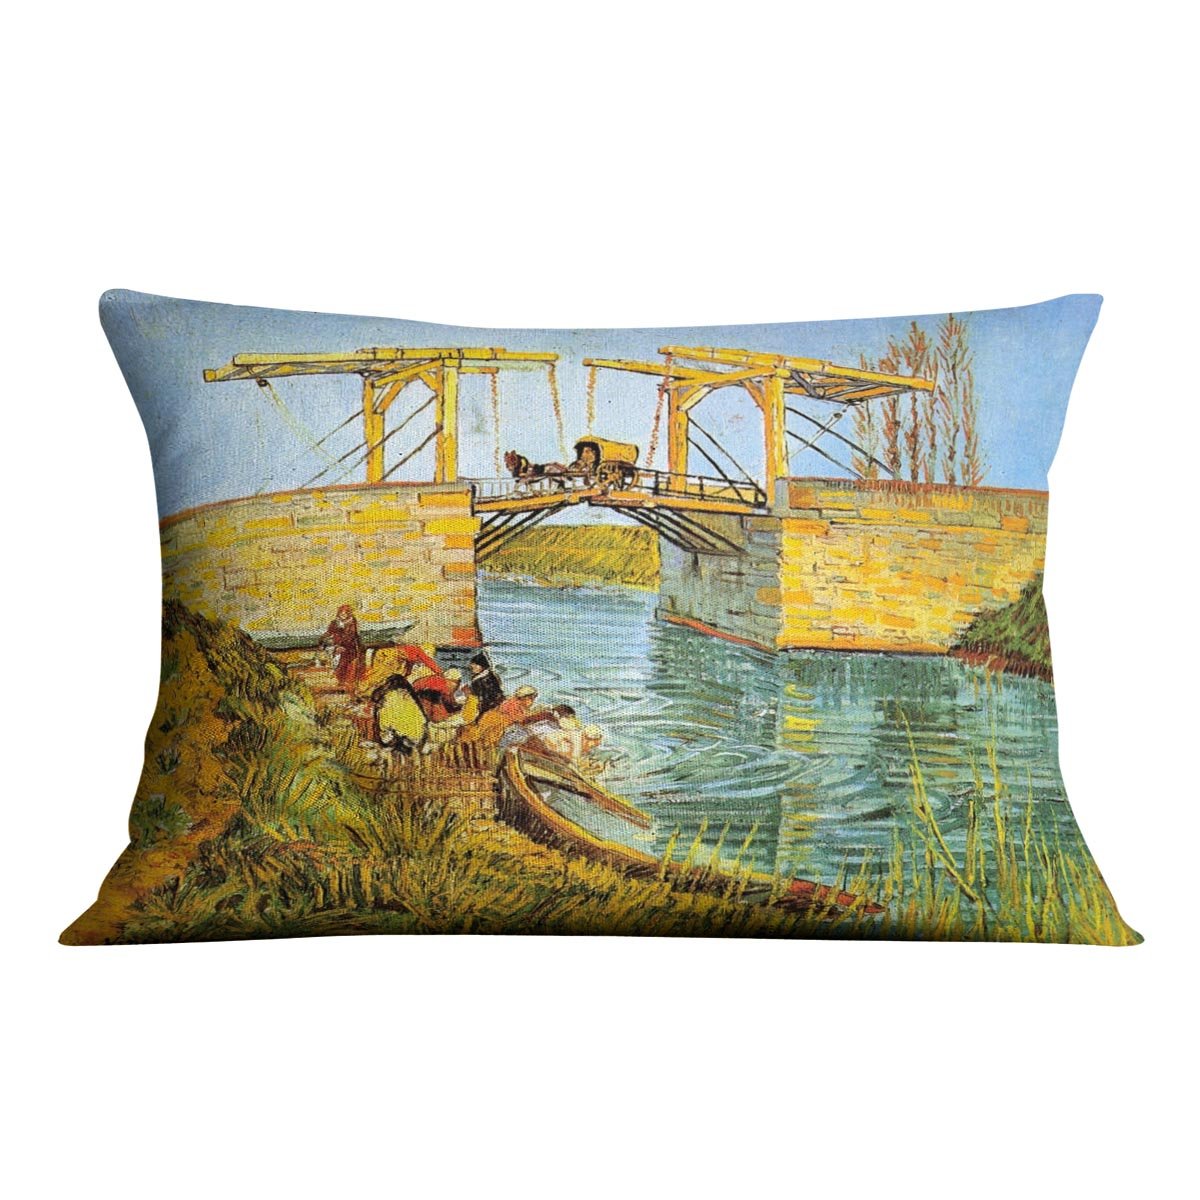 The Langlois Bridge at Arles by Van Gogh Throw Pillow